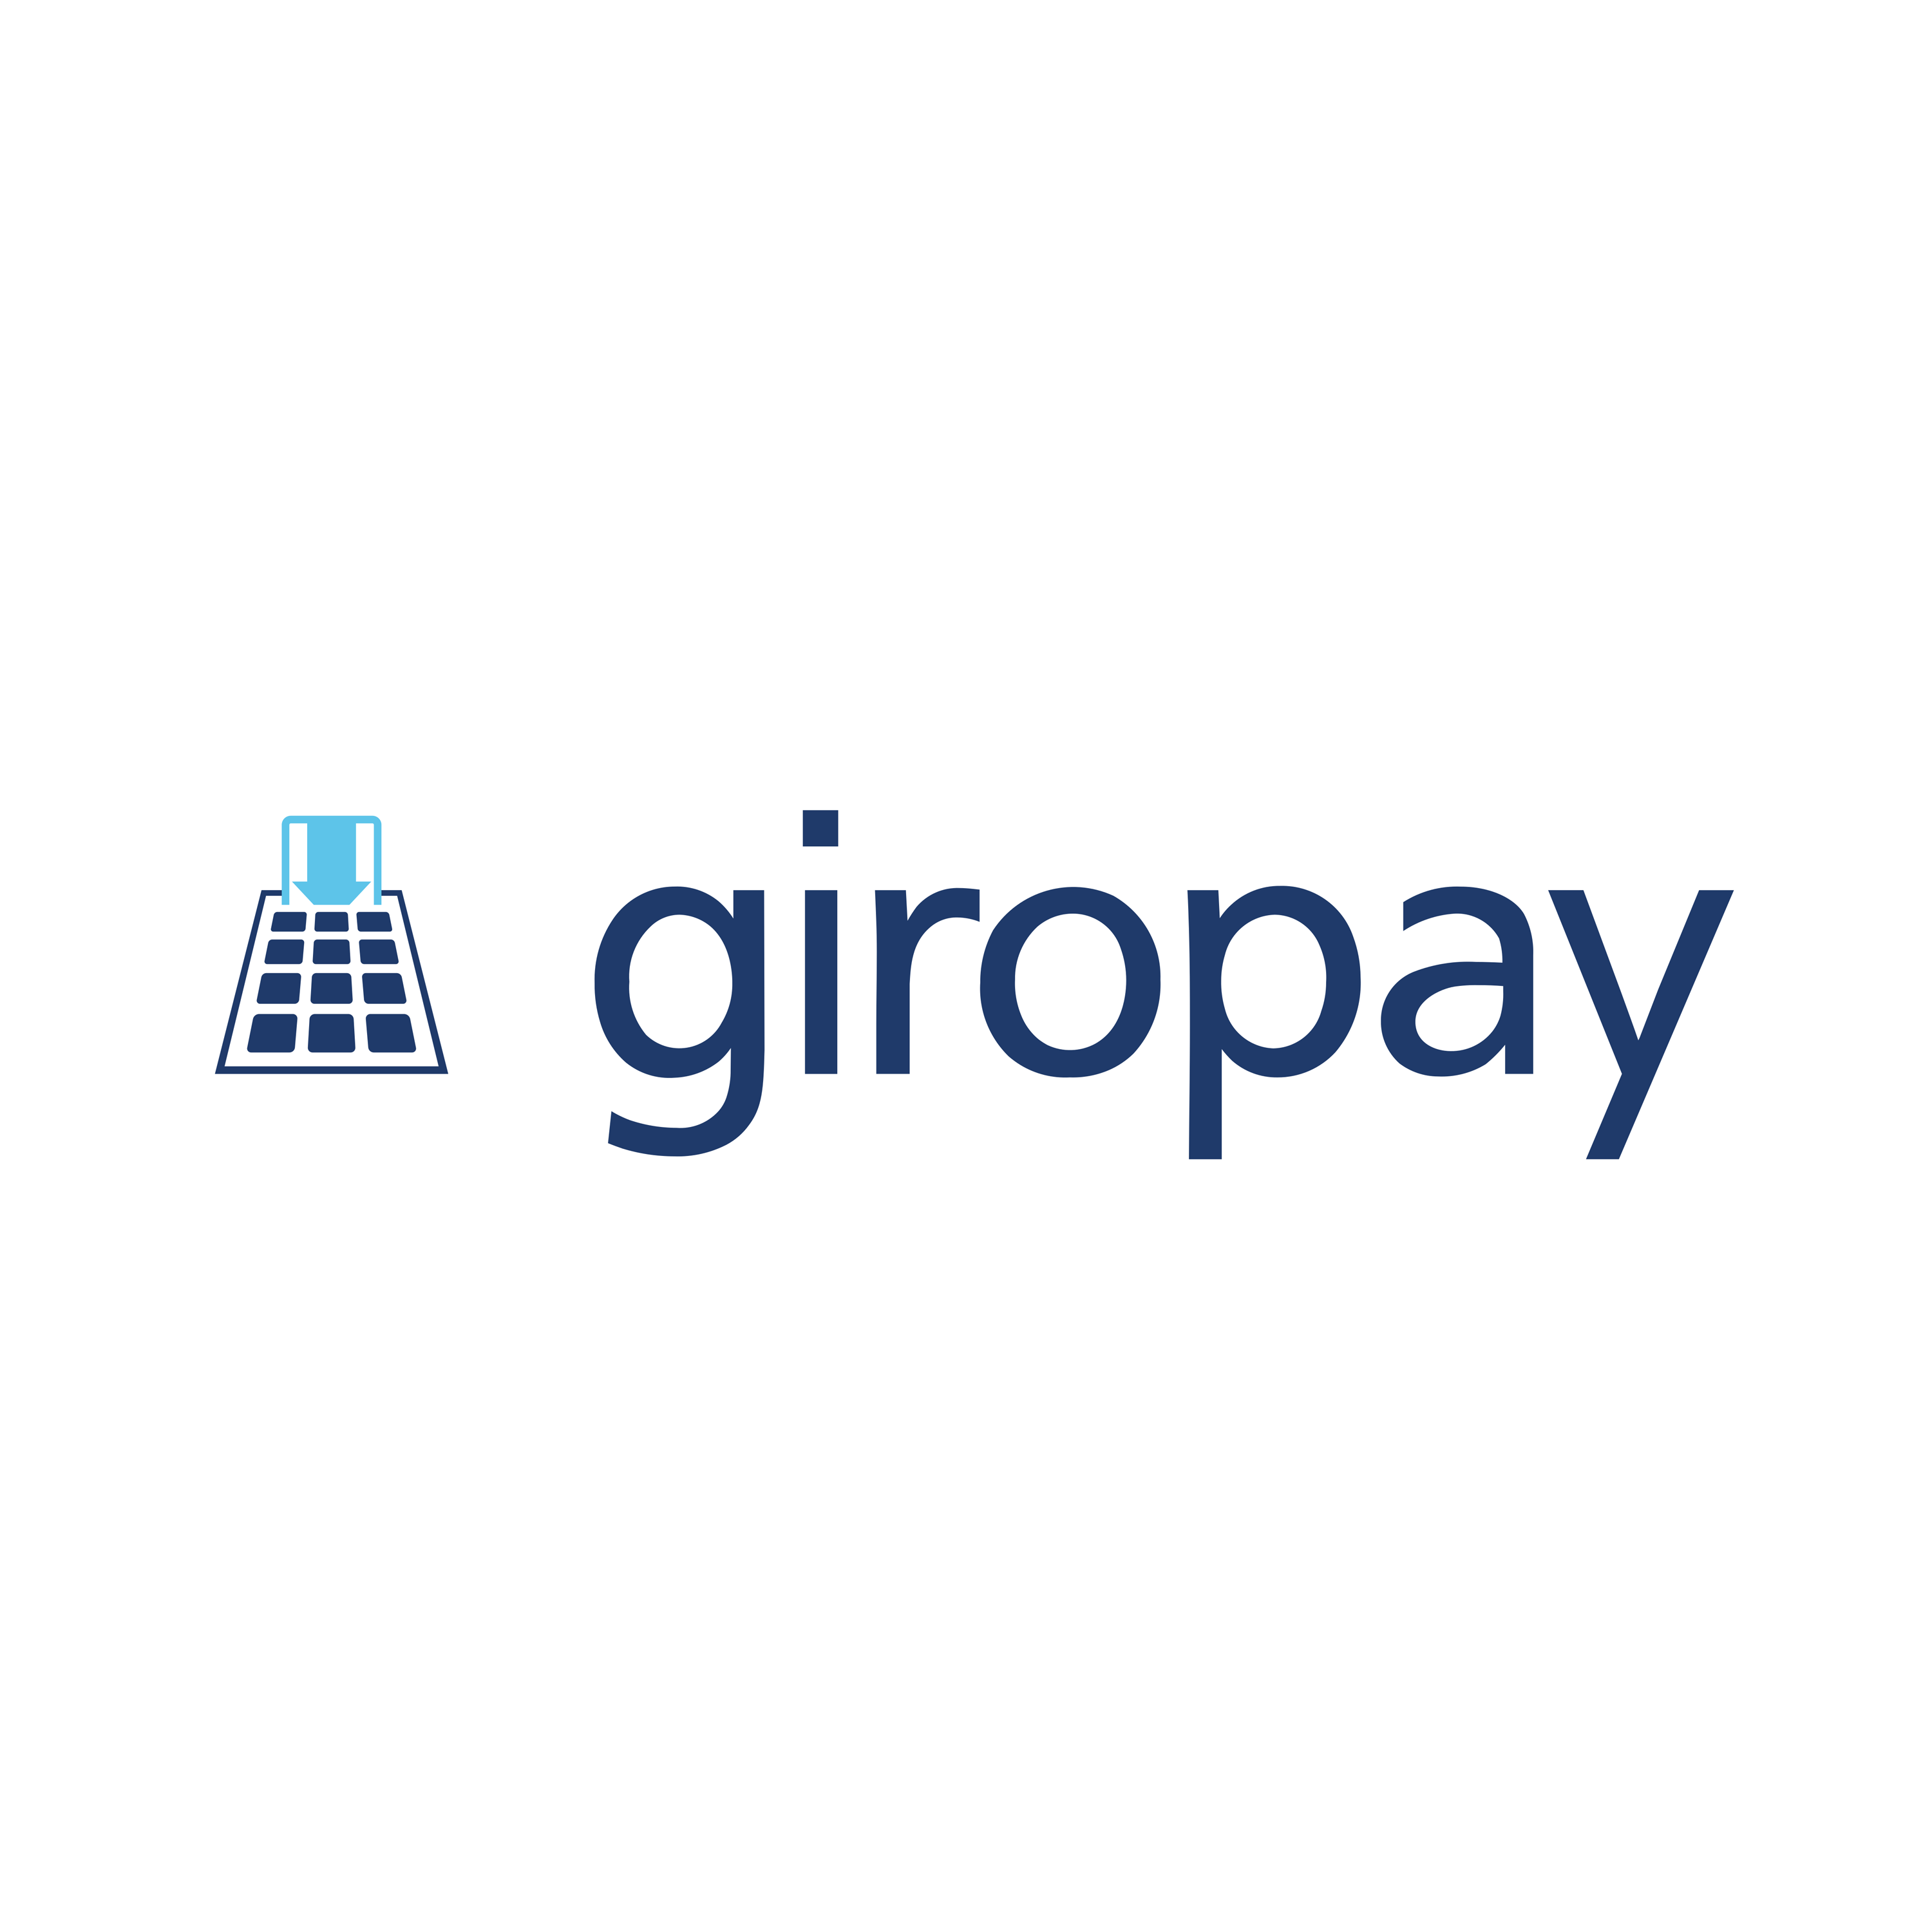 Giropay Logo Transparent Image